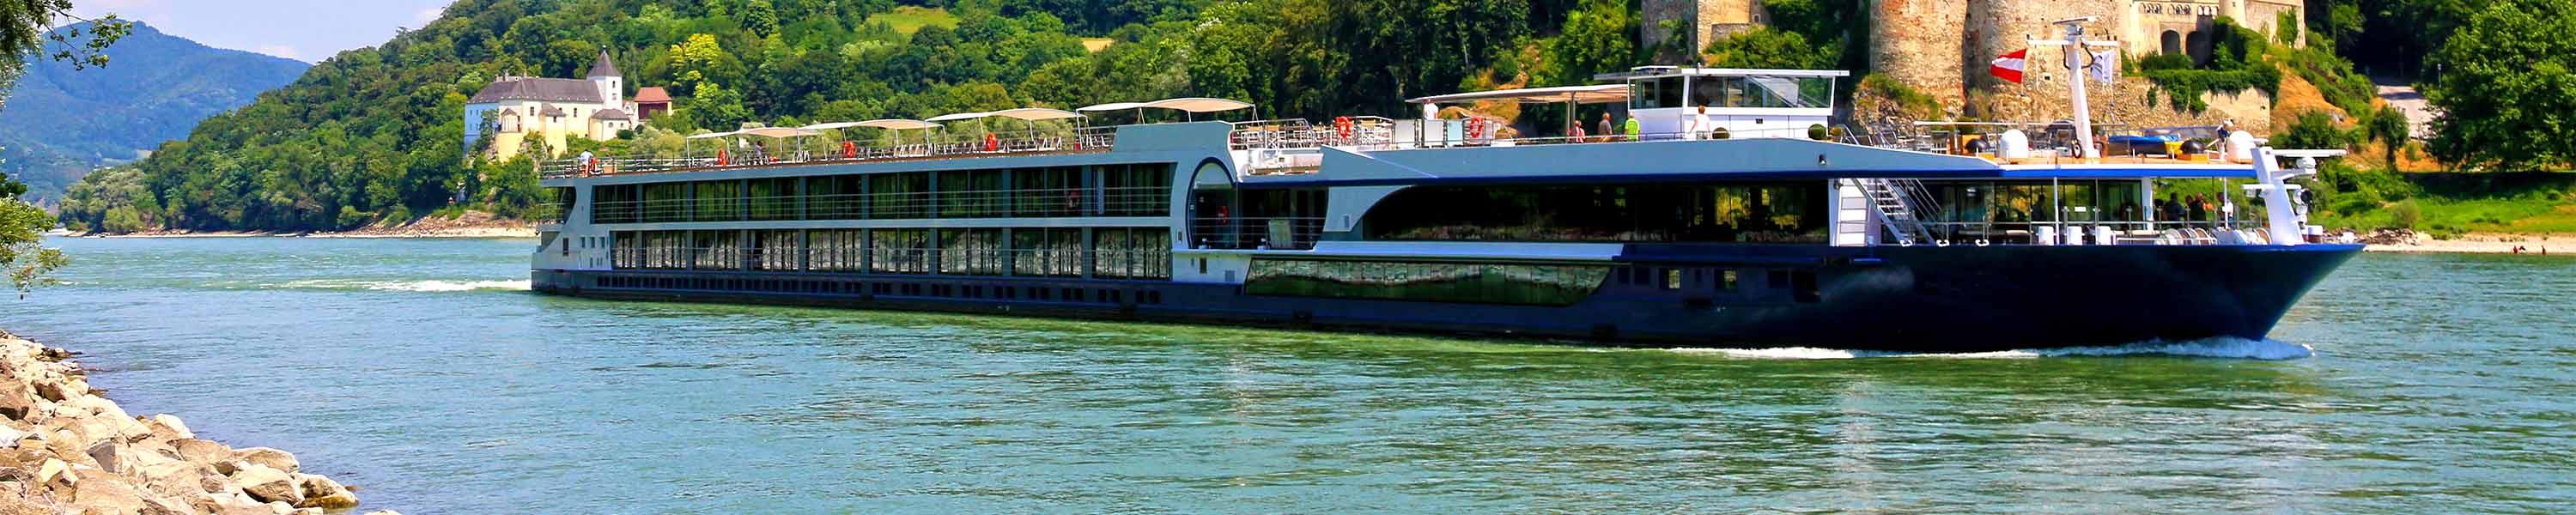 Danube Dreams River Cruise